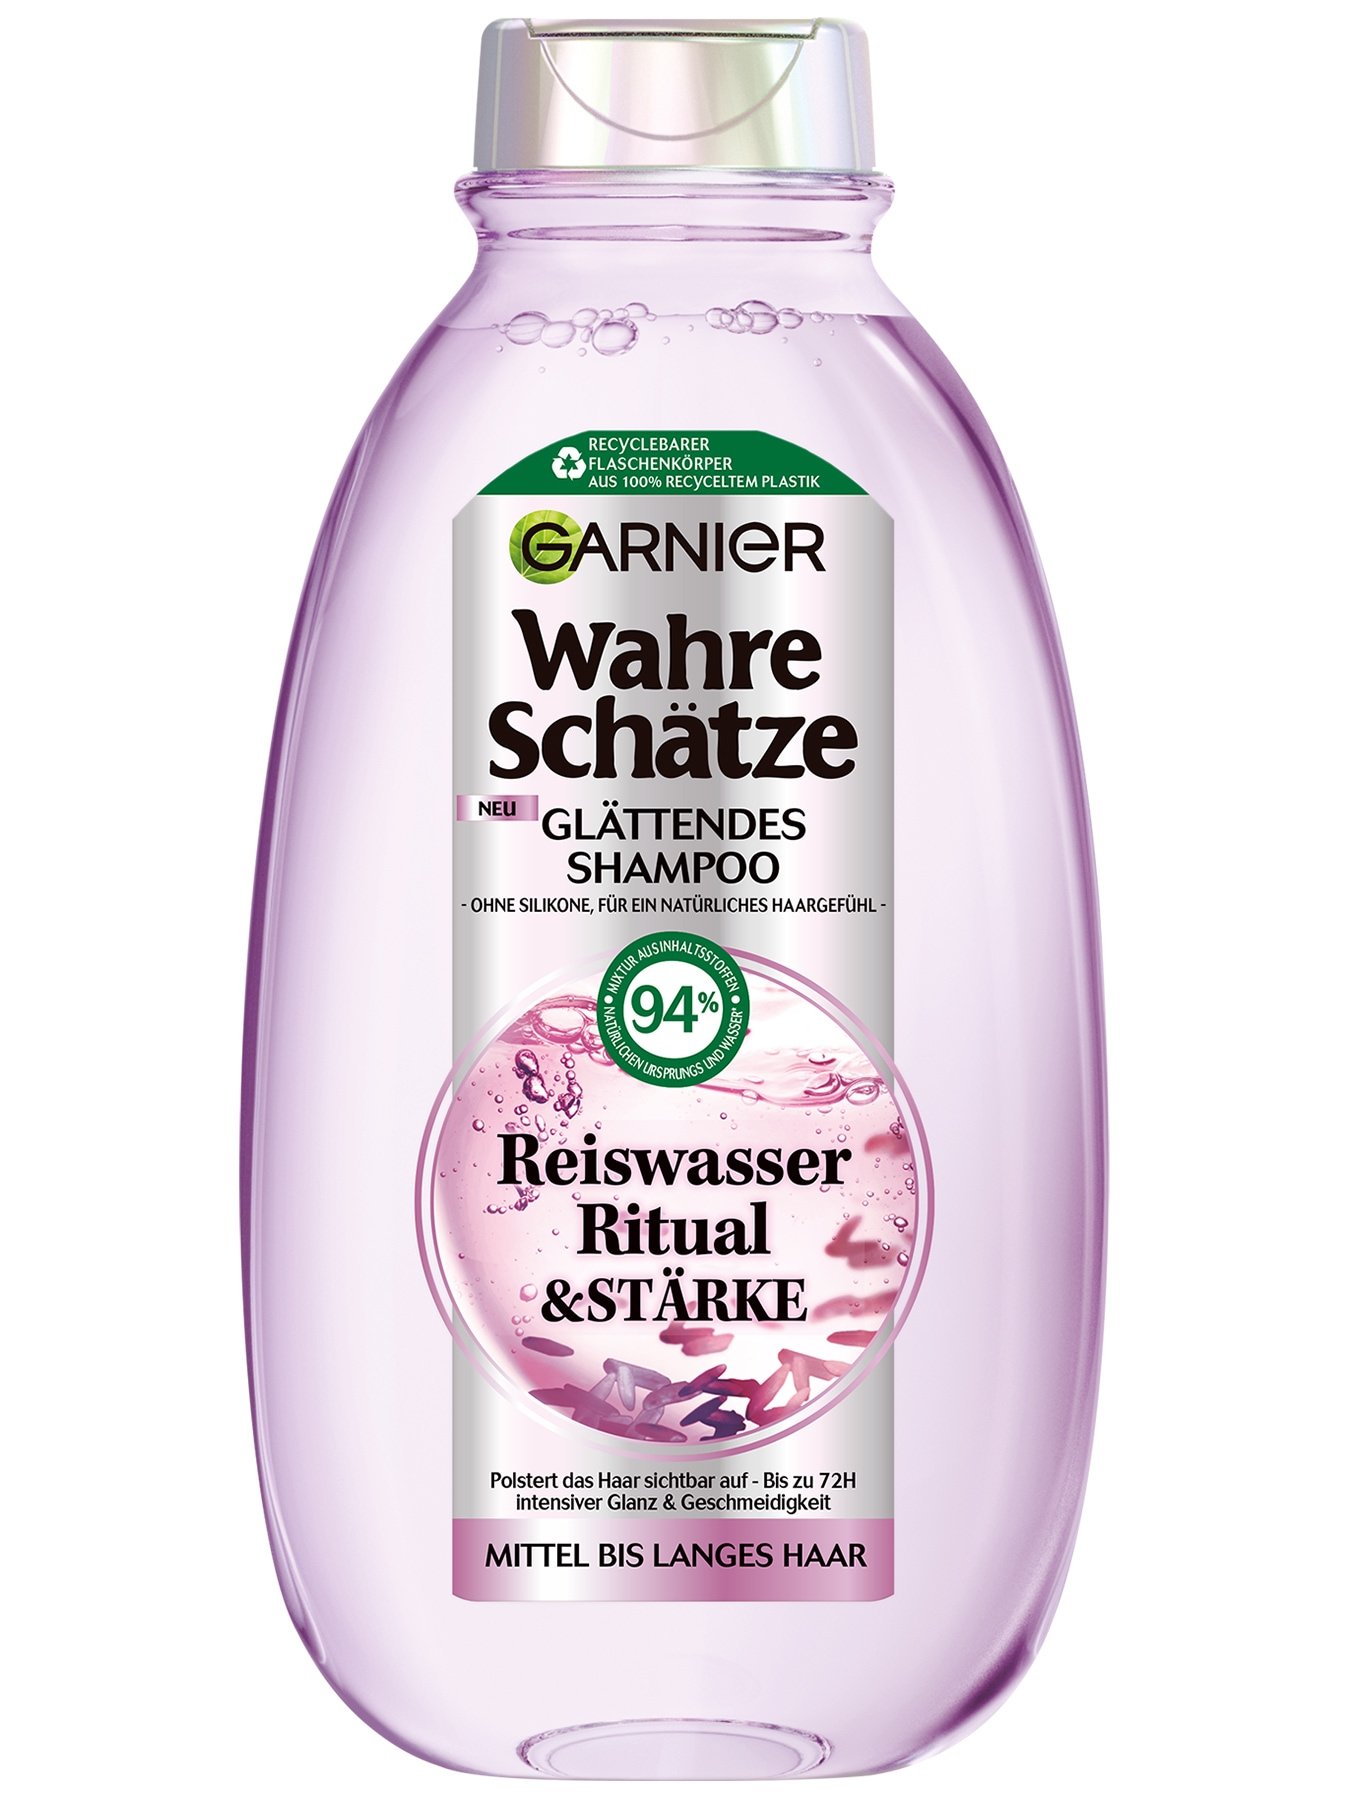 Garnier Wahre Schätze Reiswasser Ritual & Stärke, Glättendes Shampoo, 300 ml - Produktabbildung